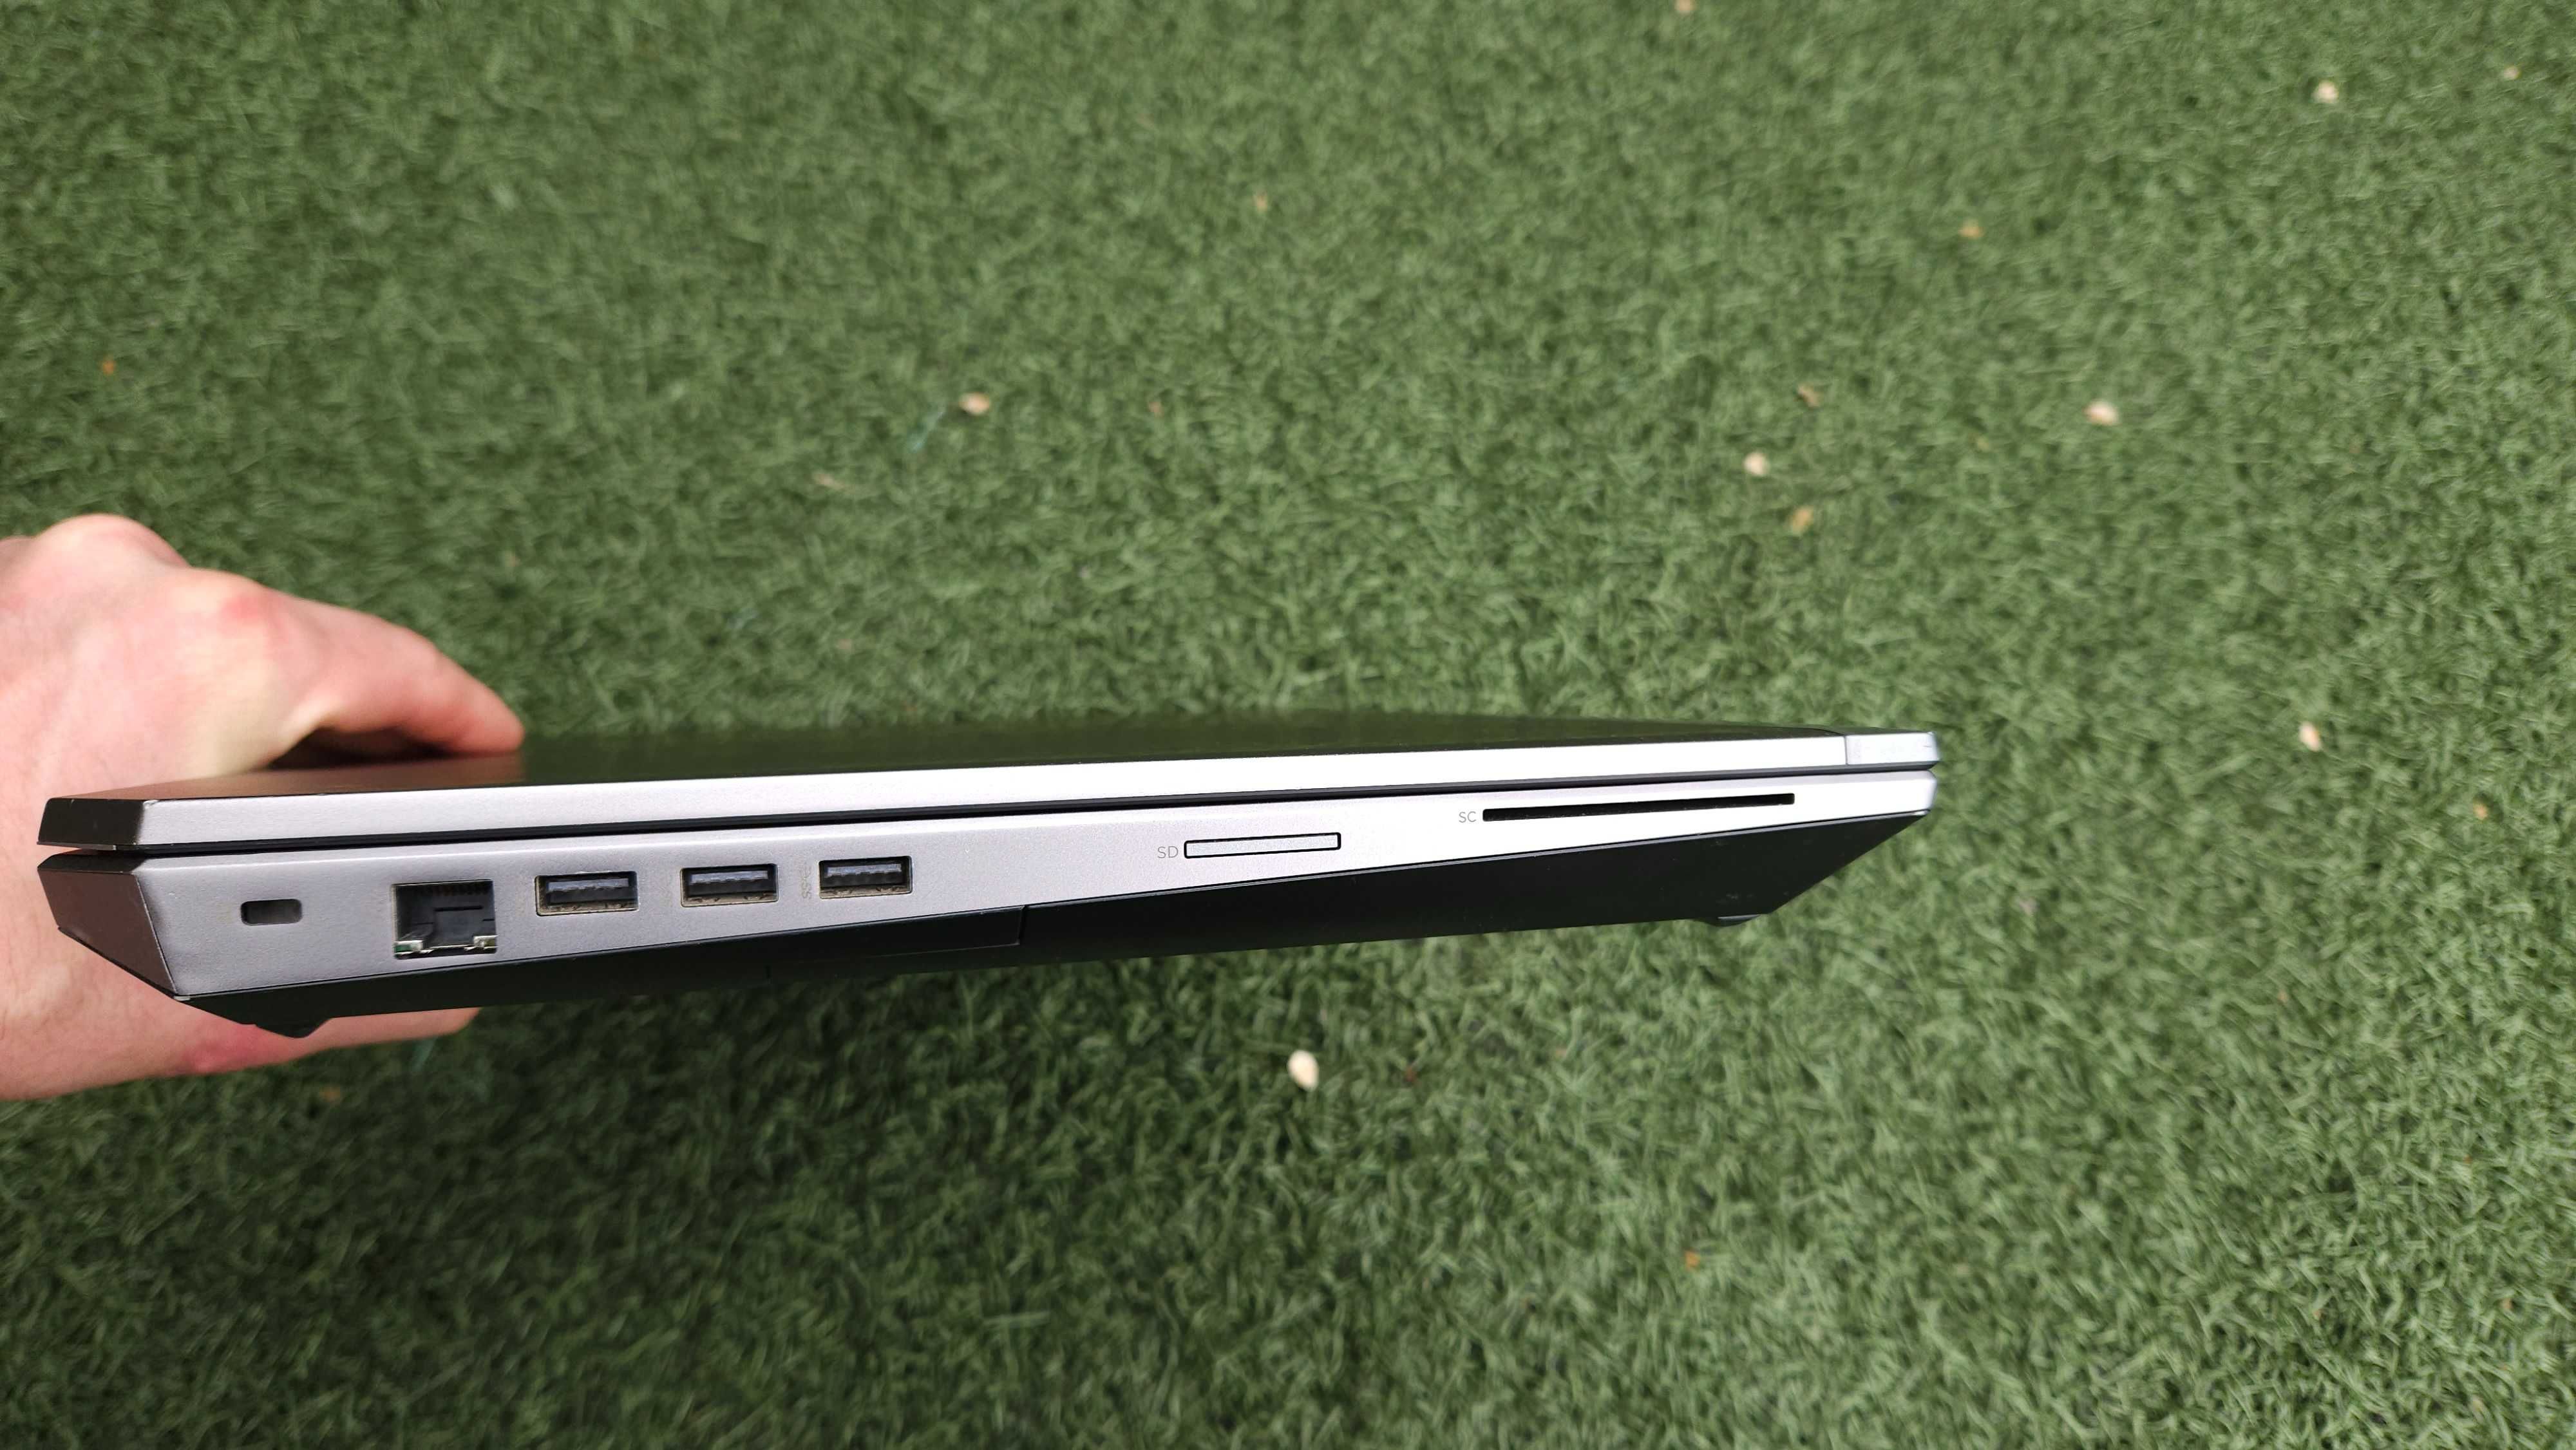 Ігровий ноутбук ультрабук HP ZBook 17 G5. 17.3, робоча станція.